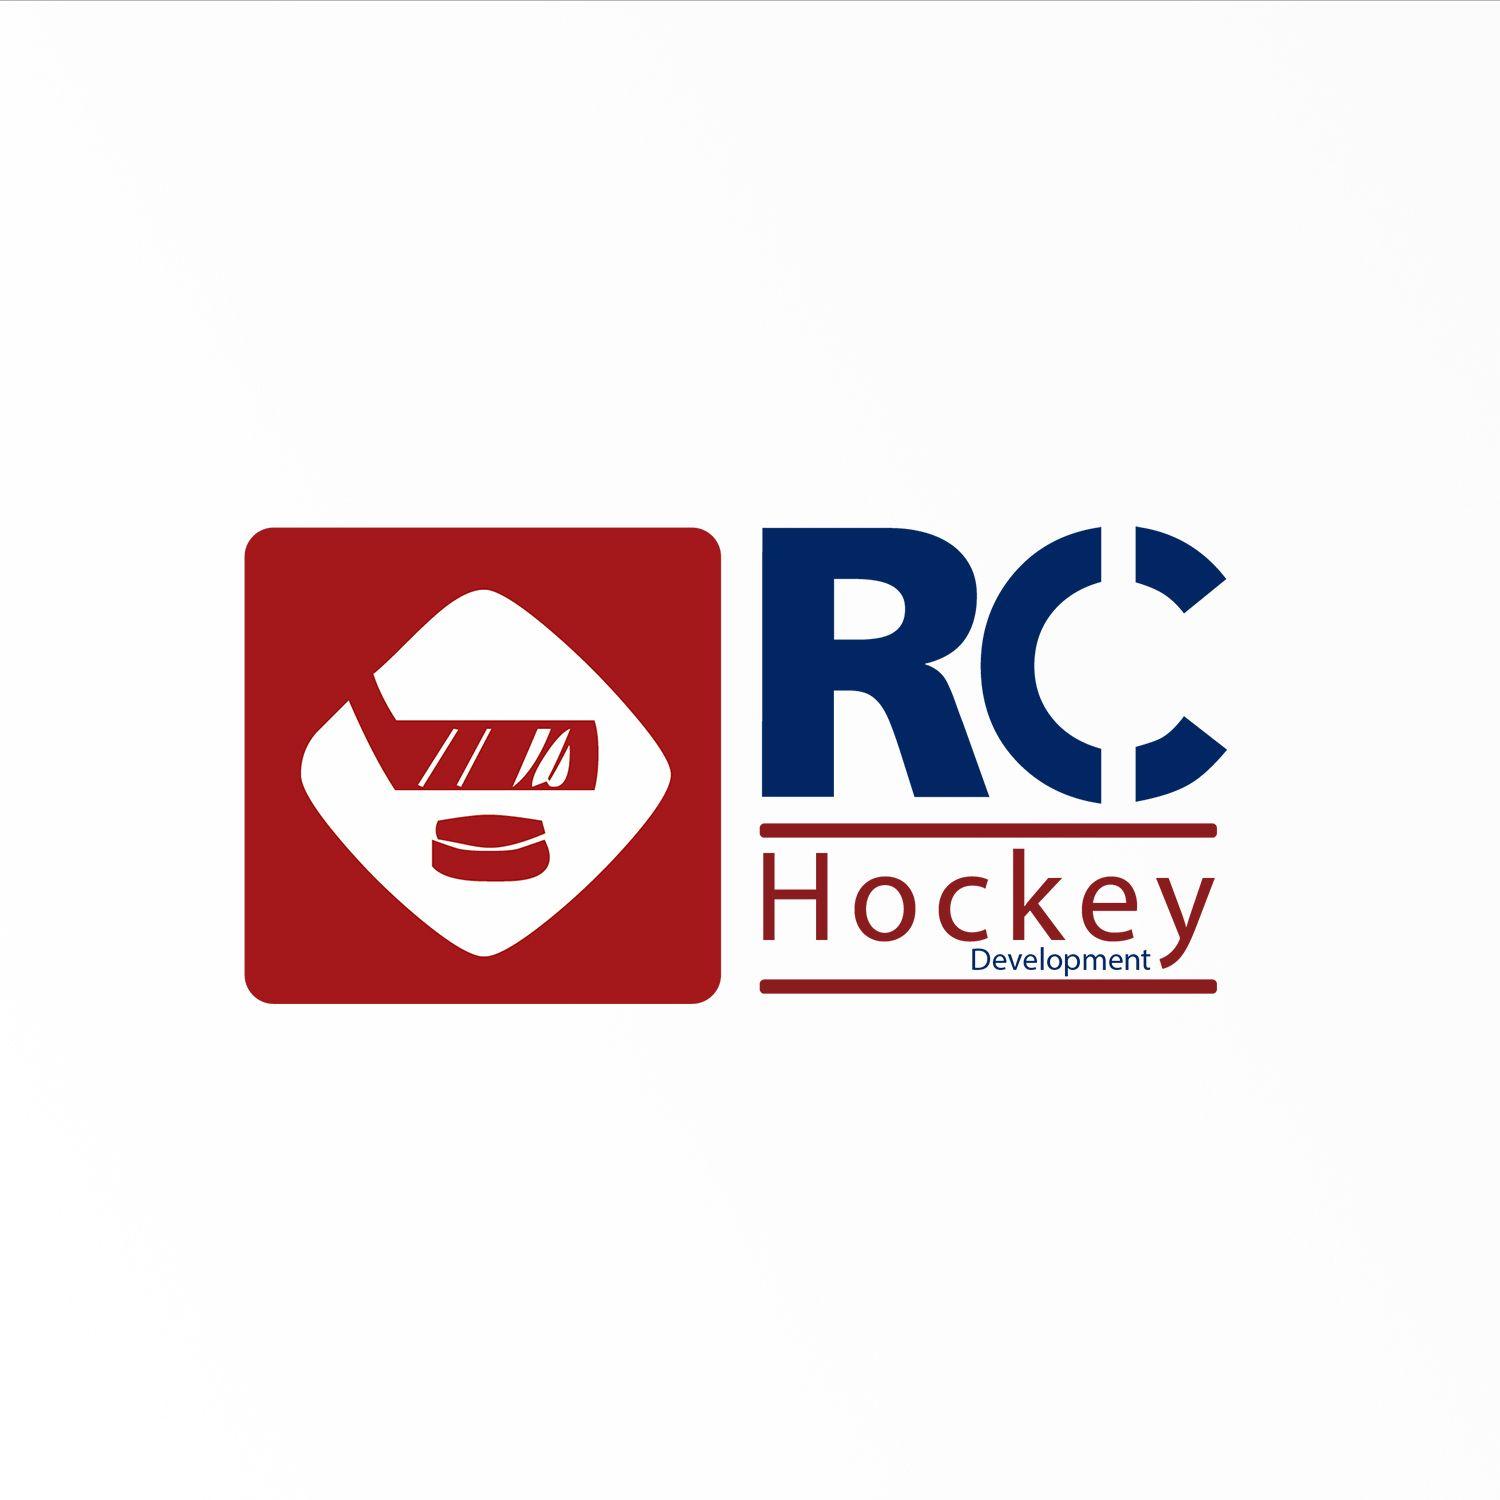 Prieto Logo - Bold, Playful Logo Design for RC Hockey Development by Sebastian ...